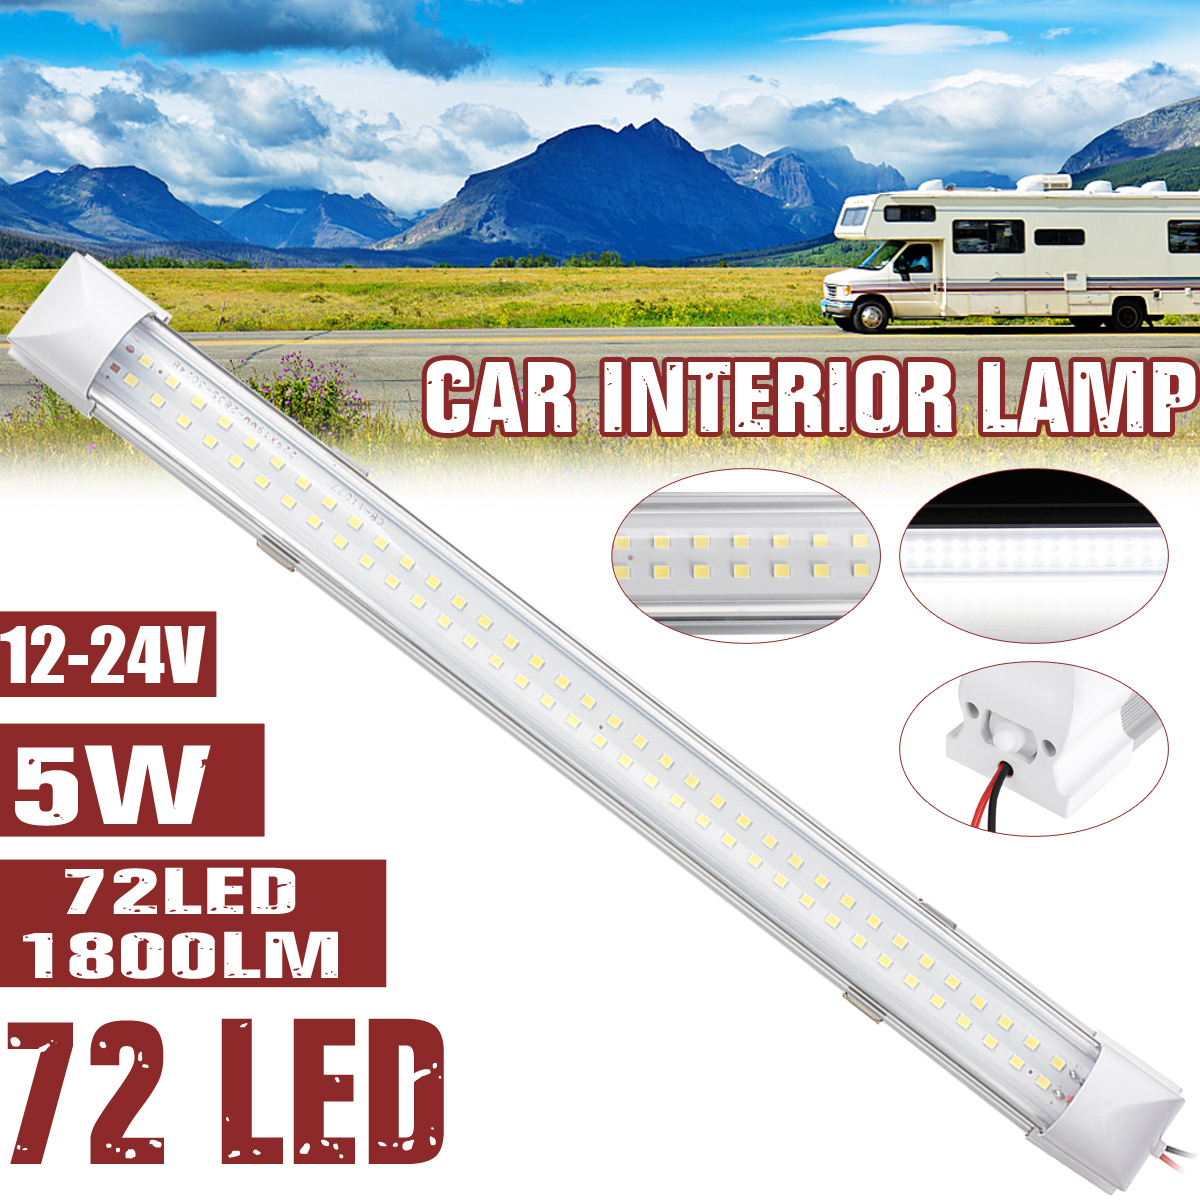 12-24V-72LED-5W-Car-Interior-White-Strip-Lights-Bar-Lamp-Car-Van-Caravan-Boat-Home-1800LM-6500K-1794992-2